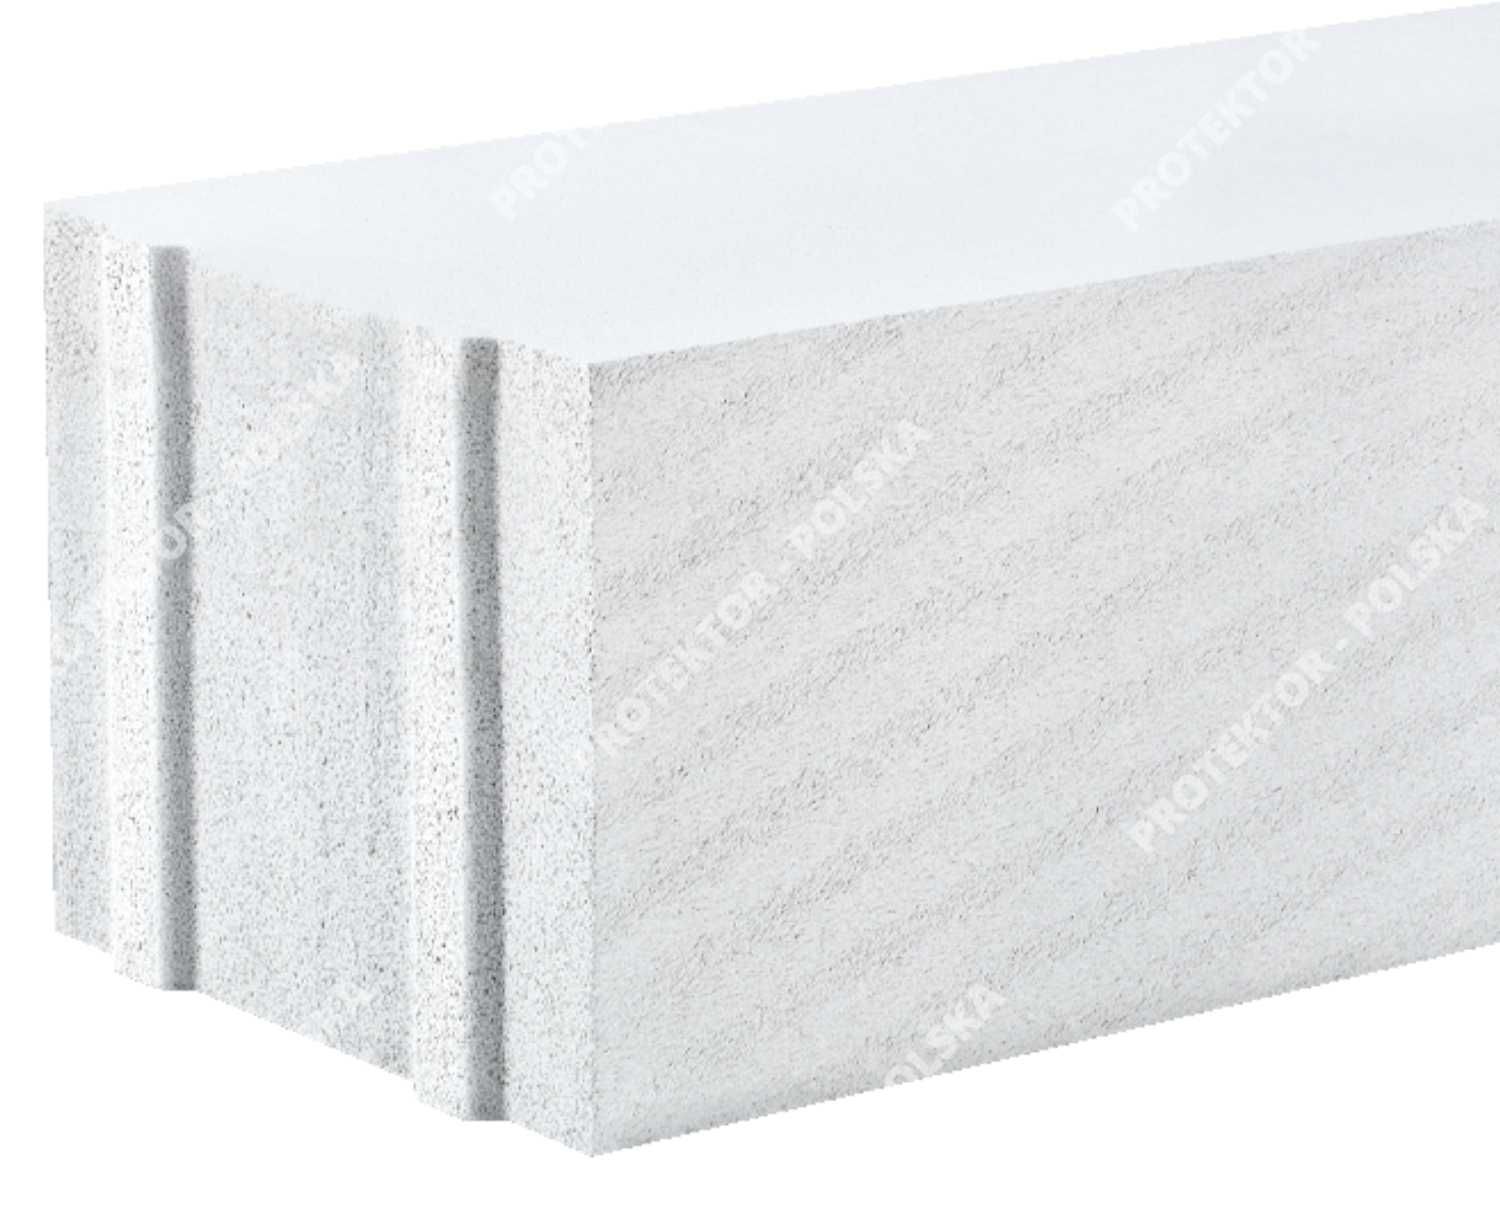 bloczek YTONG gazobeton cegła ściana pustak siporeks beton komórkowy